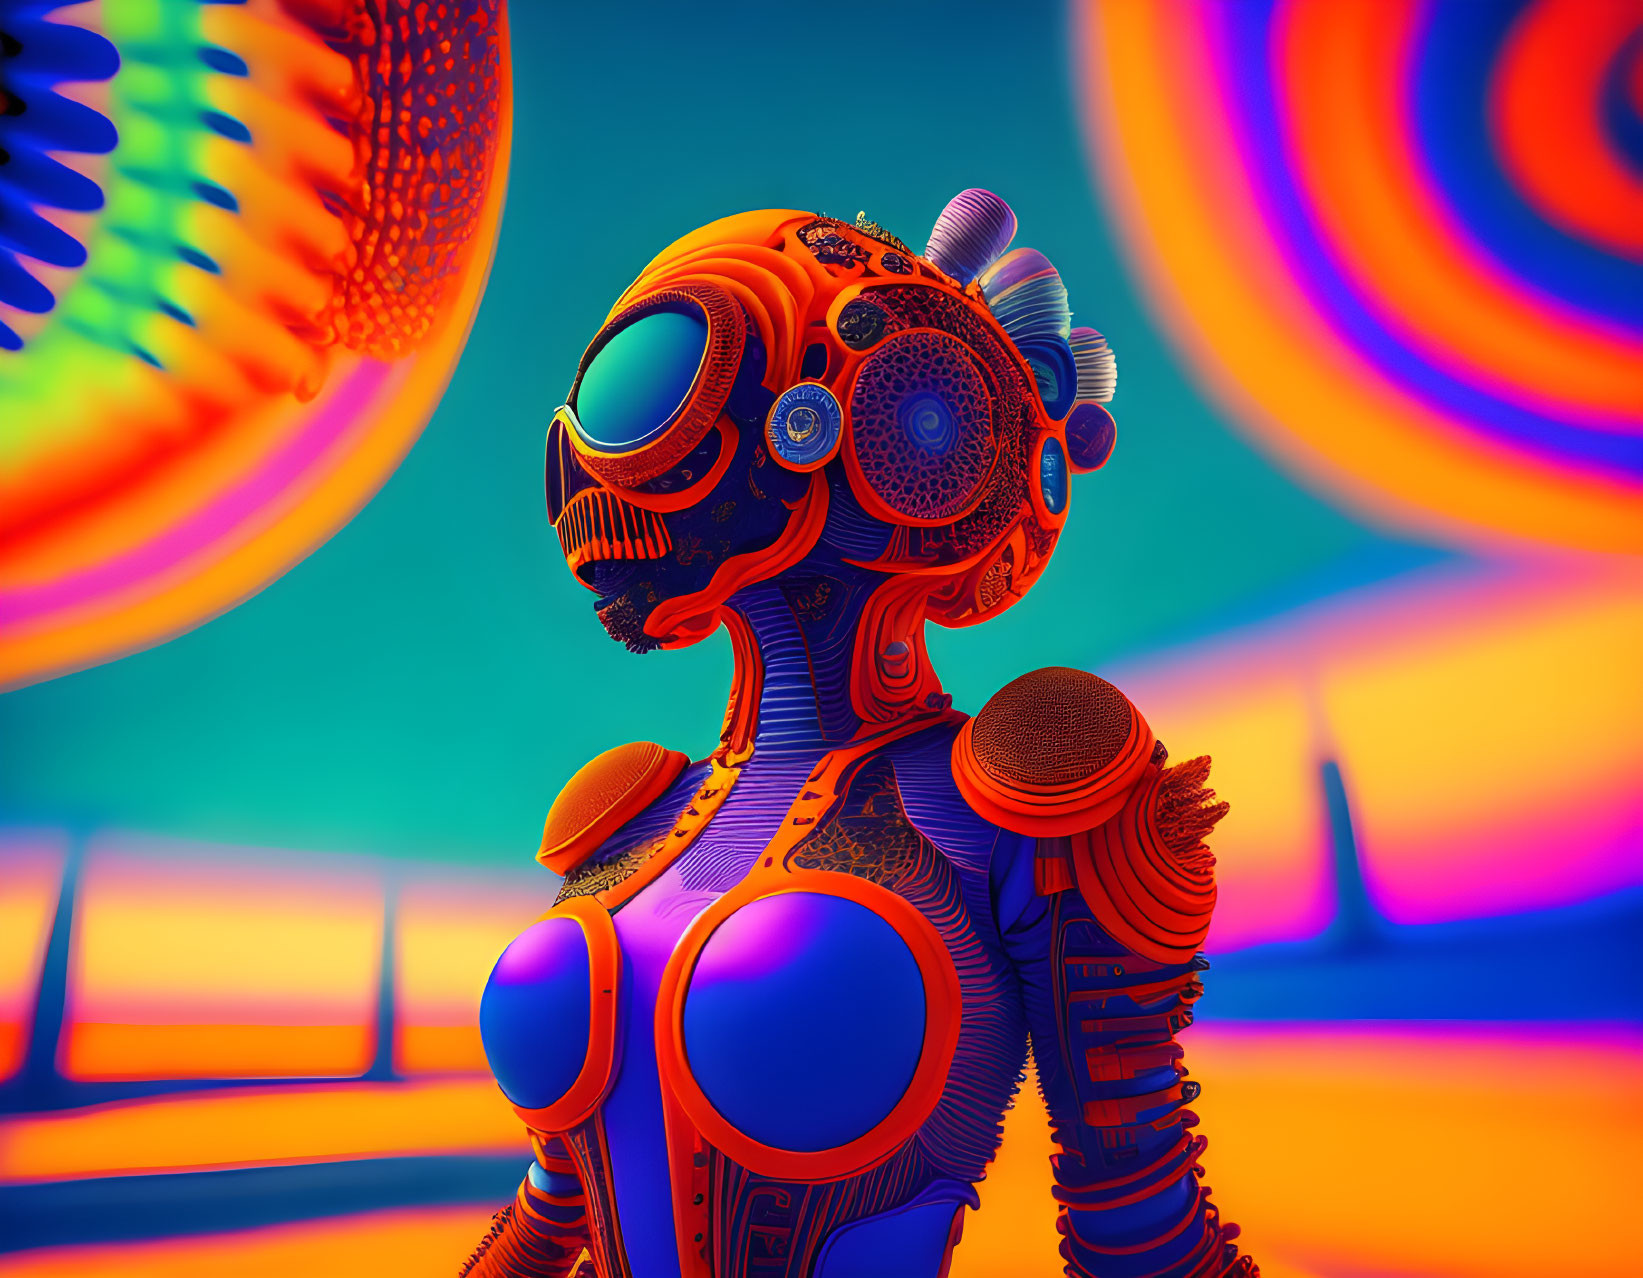 Colorful 3D illustration of robotic figure in futuristic setting